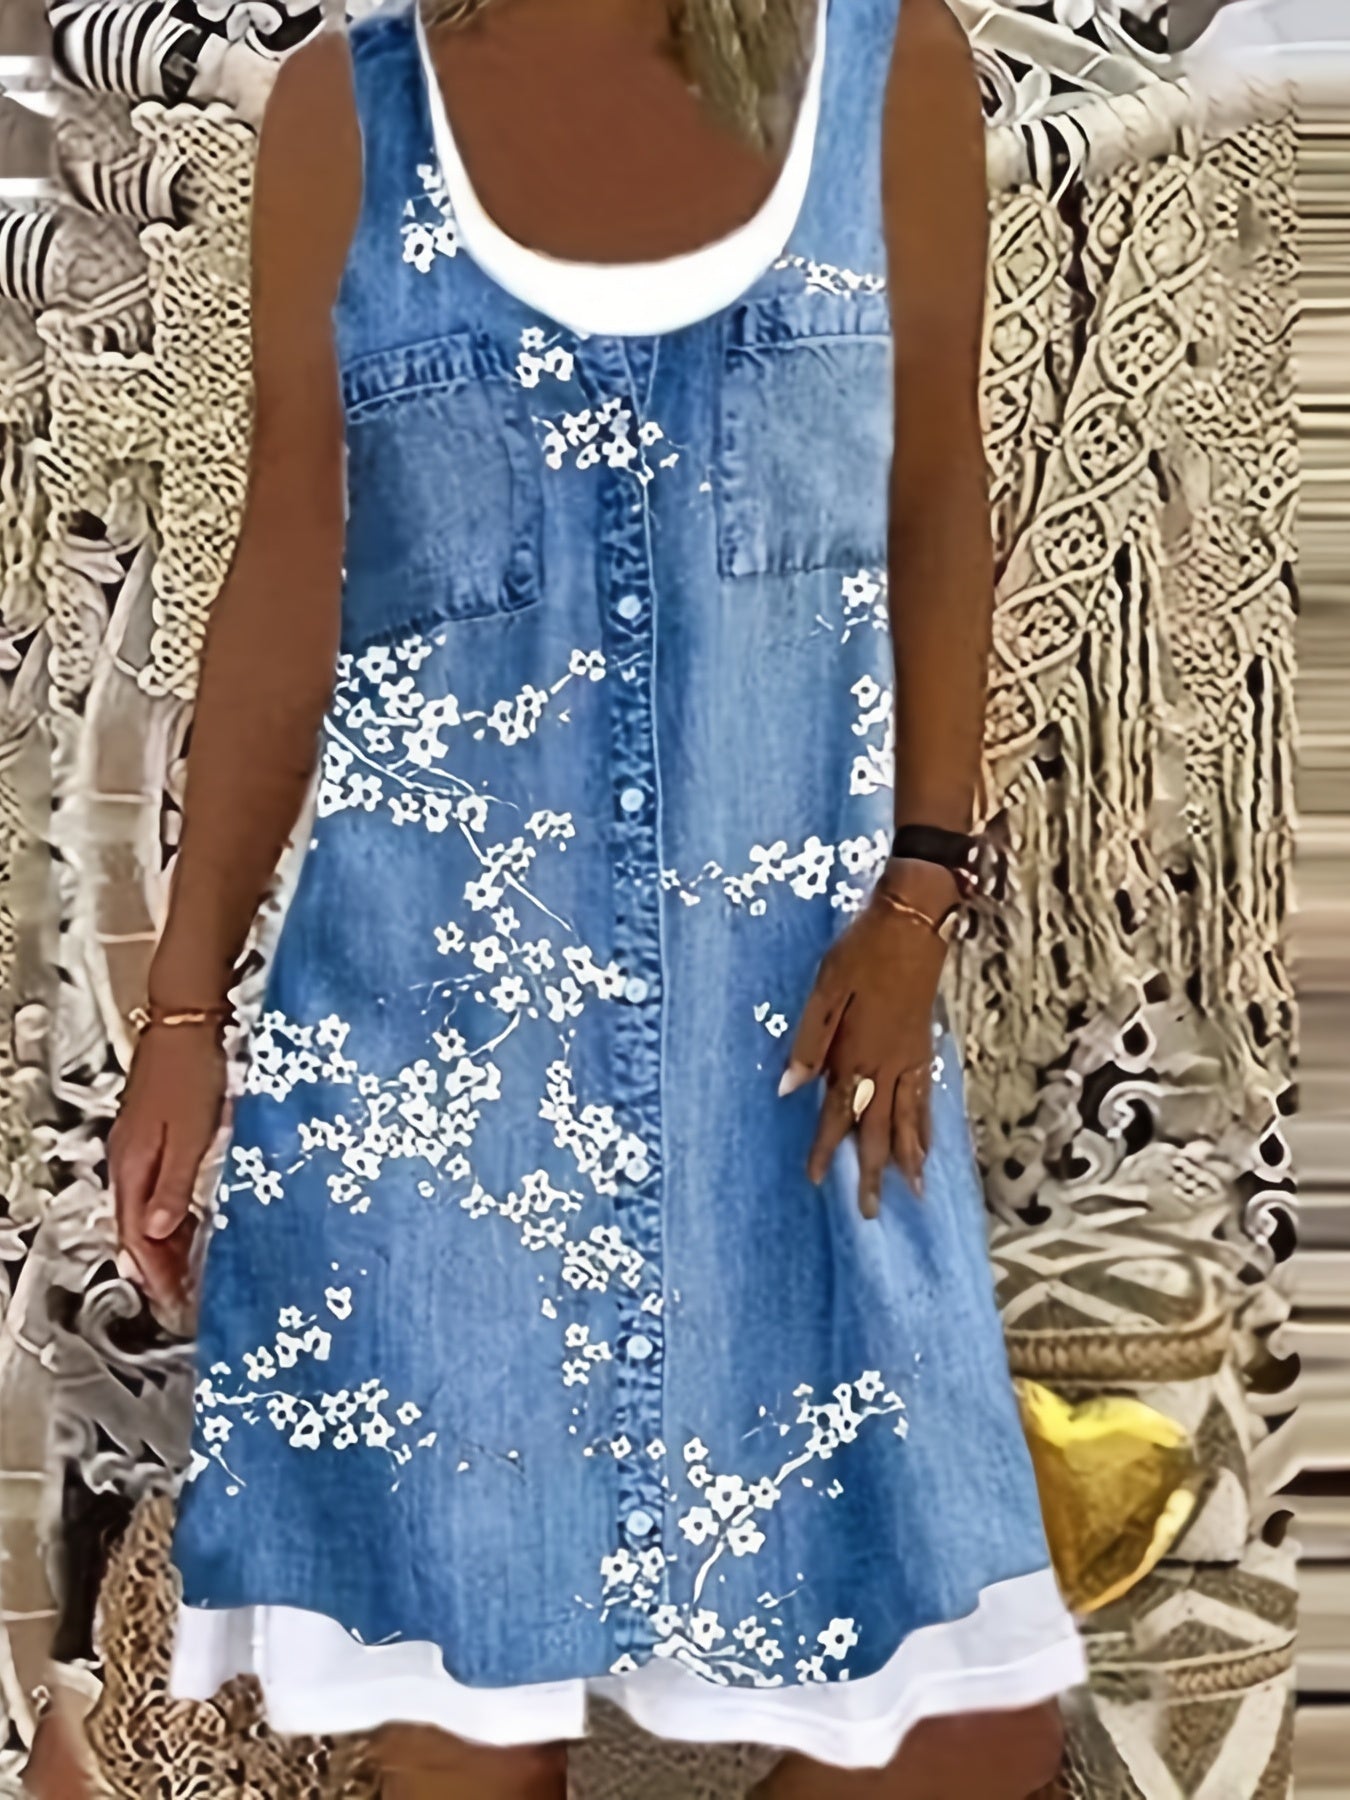 「lovevop」Denim & Butterfly Print Dress, Casual Sleeveless Dress For Spring & Summer, Women's Clothing